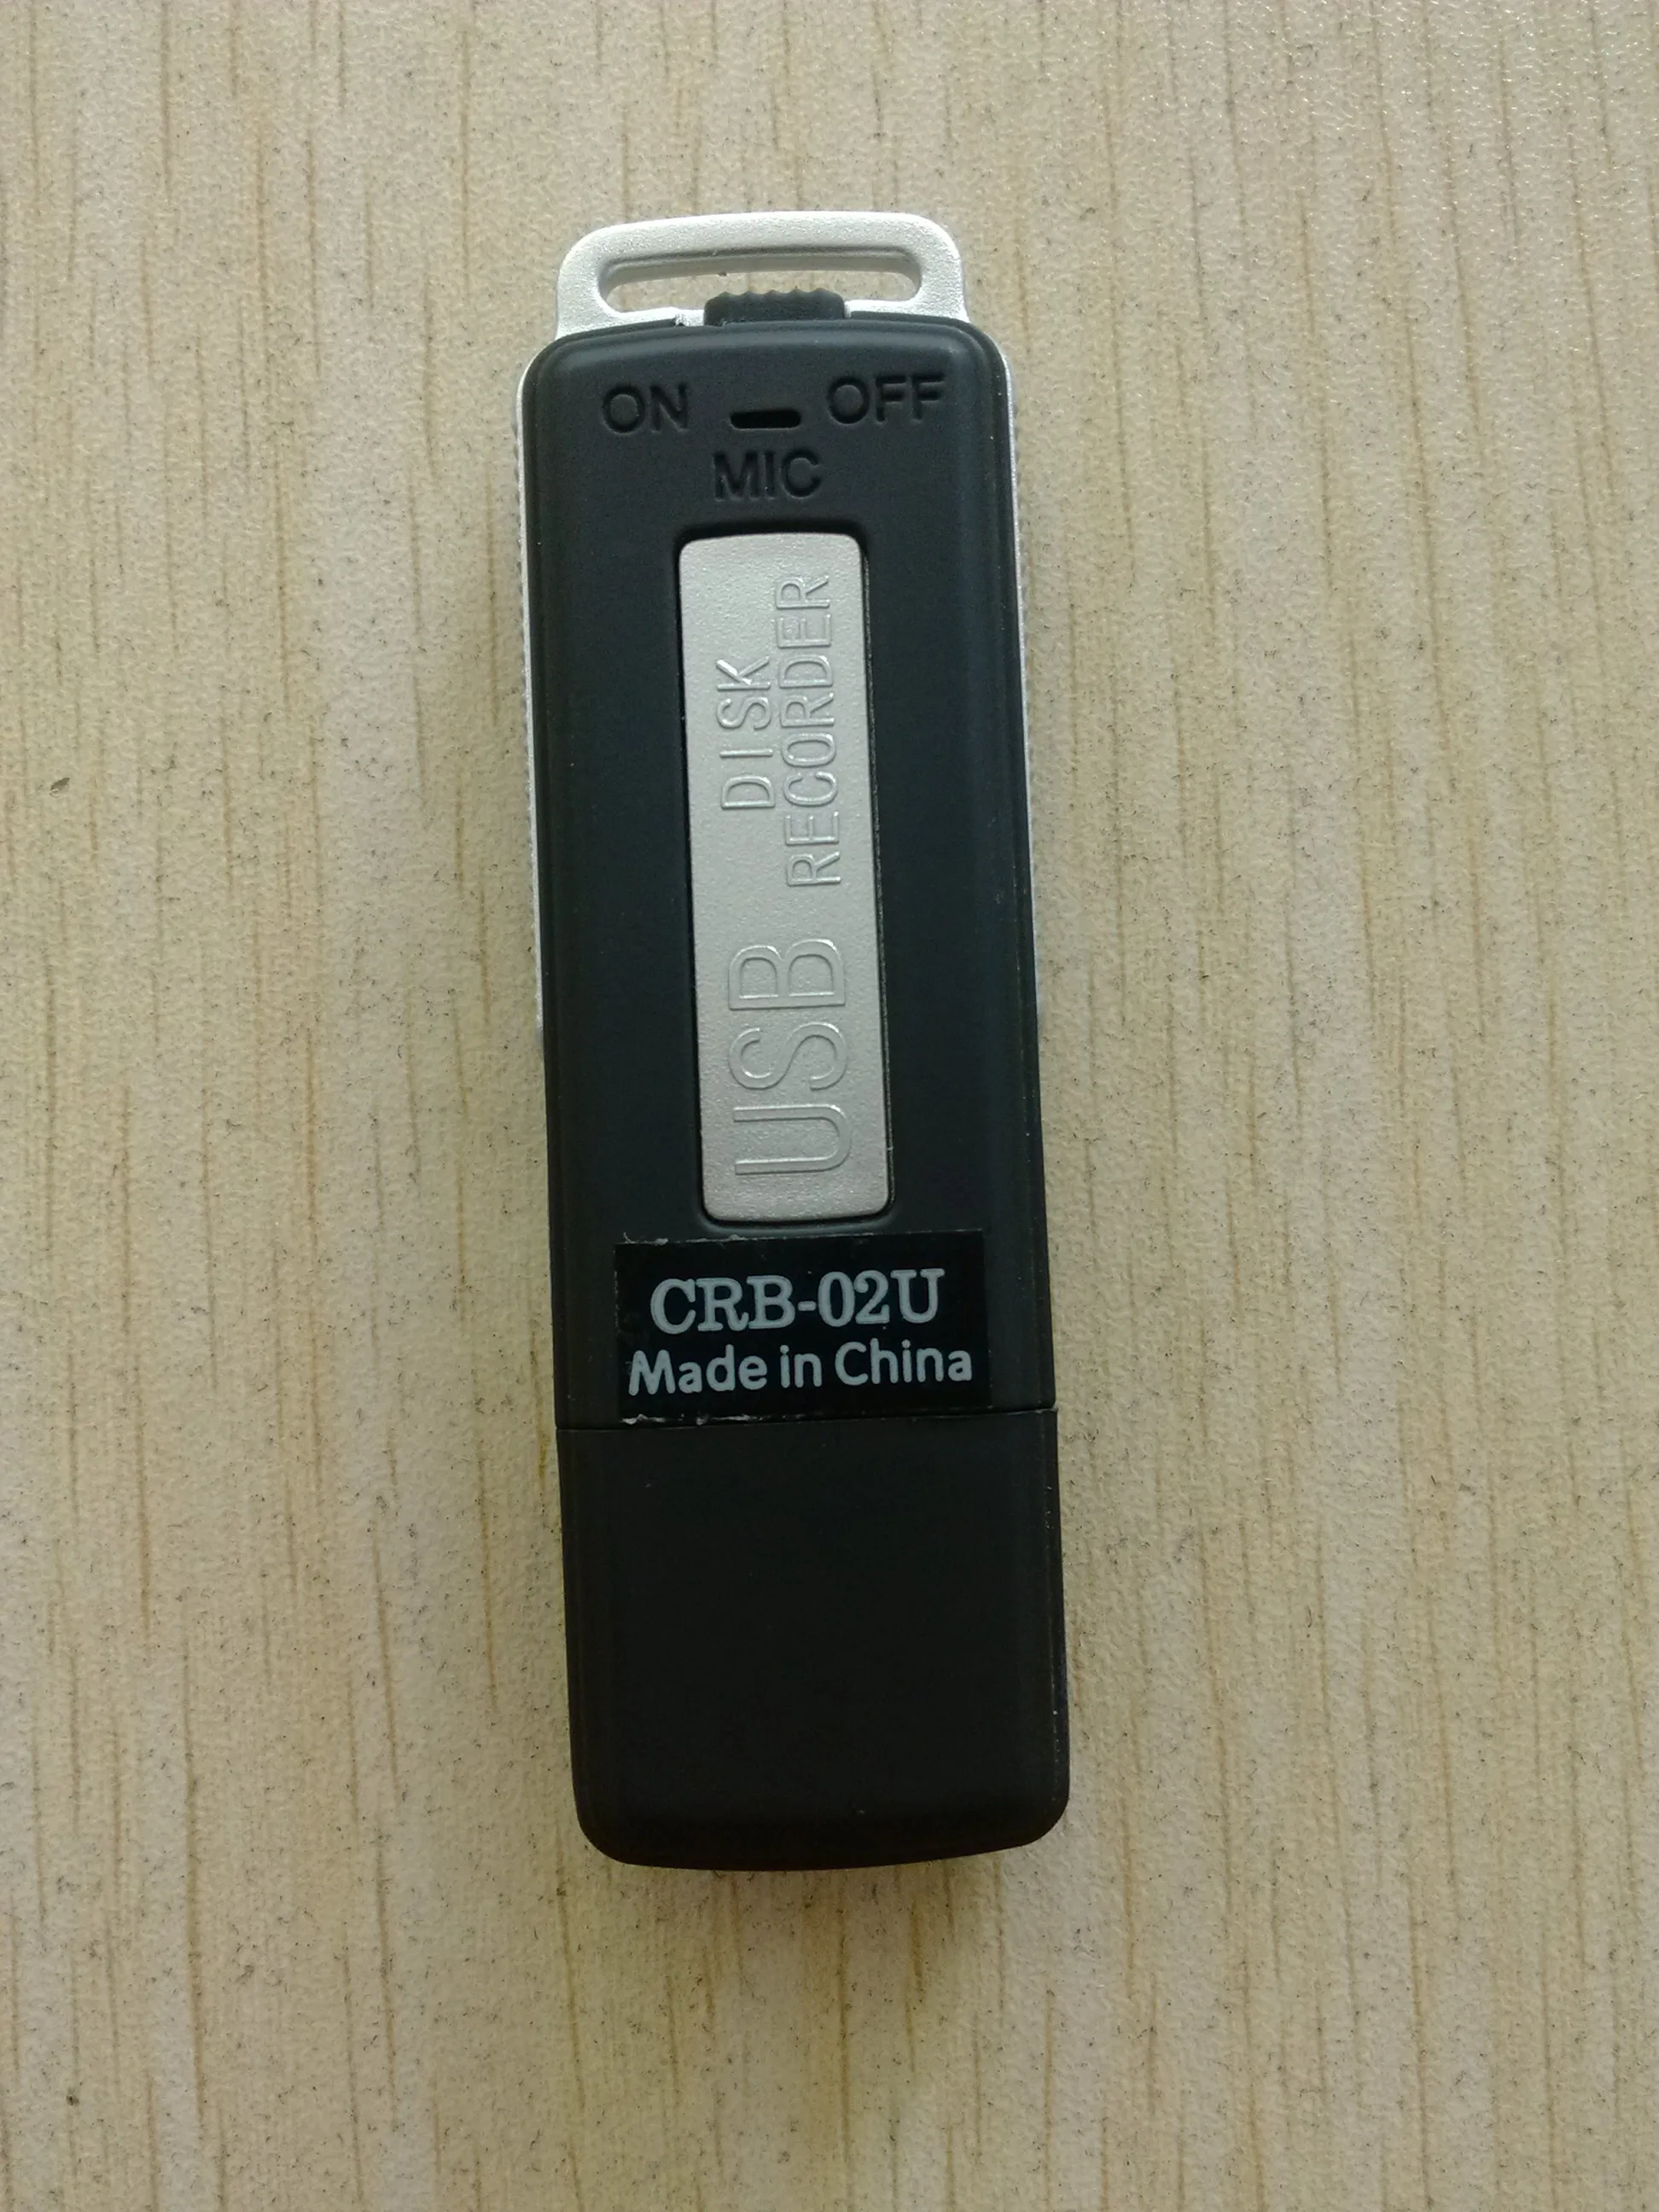 4GB USB Mini Micro Hidden Spy usb Audio Recorder With Password Protect